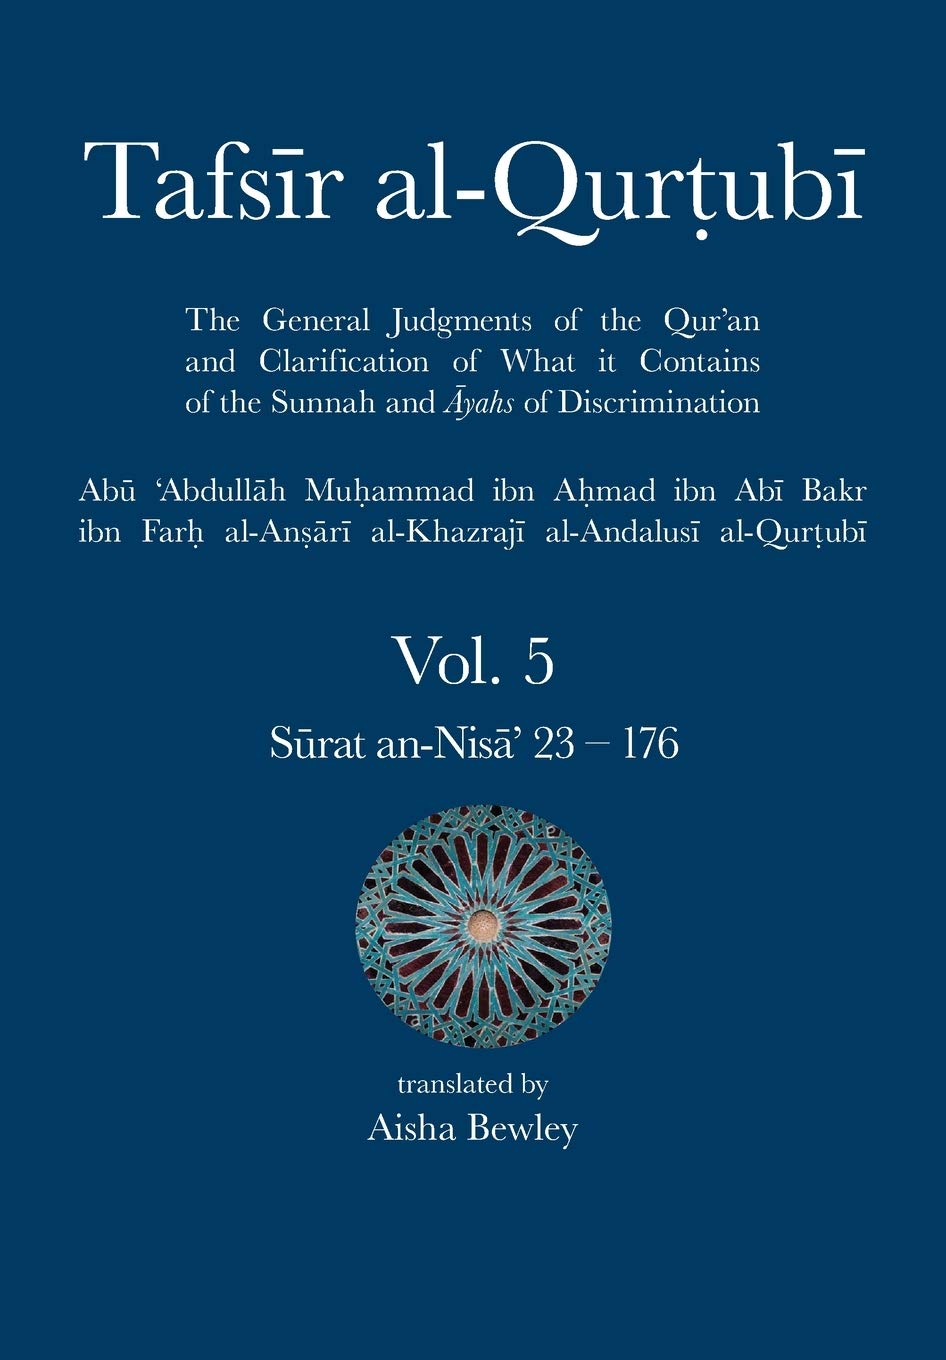 Tafsir al-Qurtubi Vol. 5: Juz' 5: Sūrat an-Nisā' 23 - 176 - Abu 'Abdullah Muhammad Al-Qurtubi (Author), Abdalhaqq Bewley (Editor), Aisha Abdurrahman Bewley (Translator)